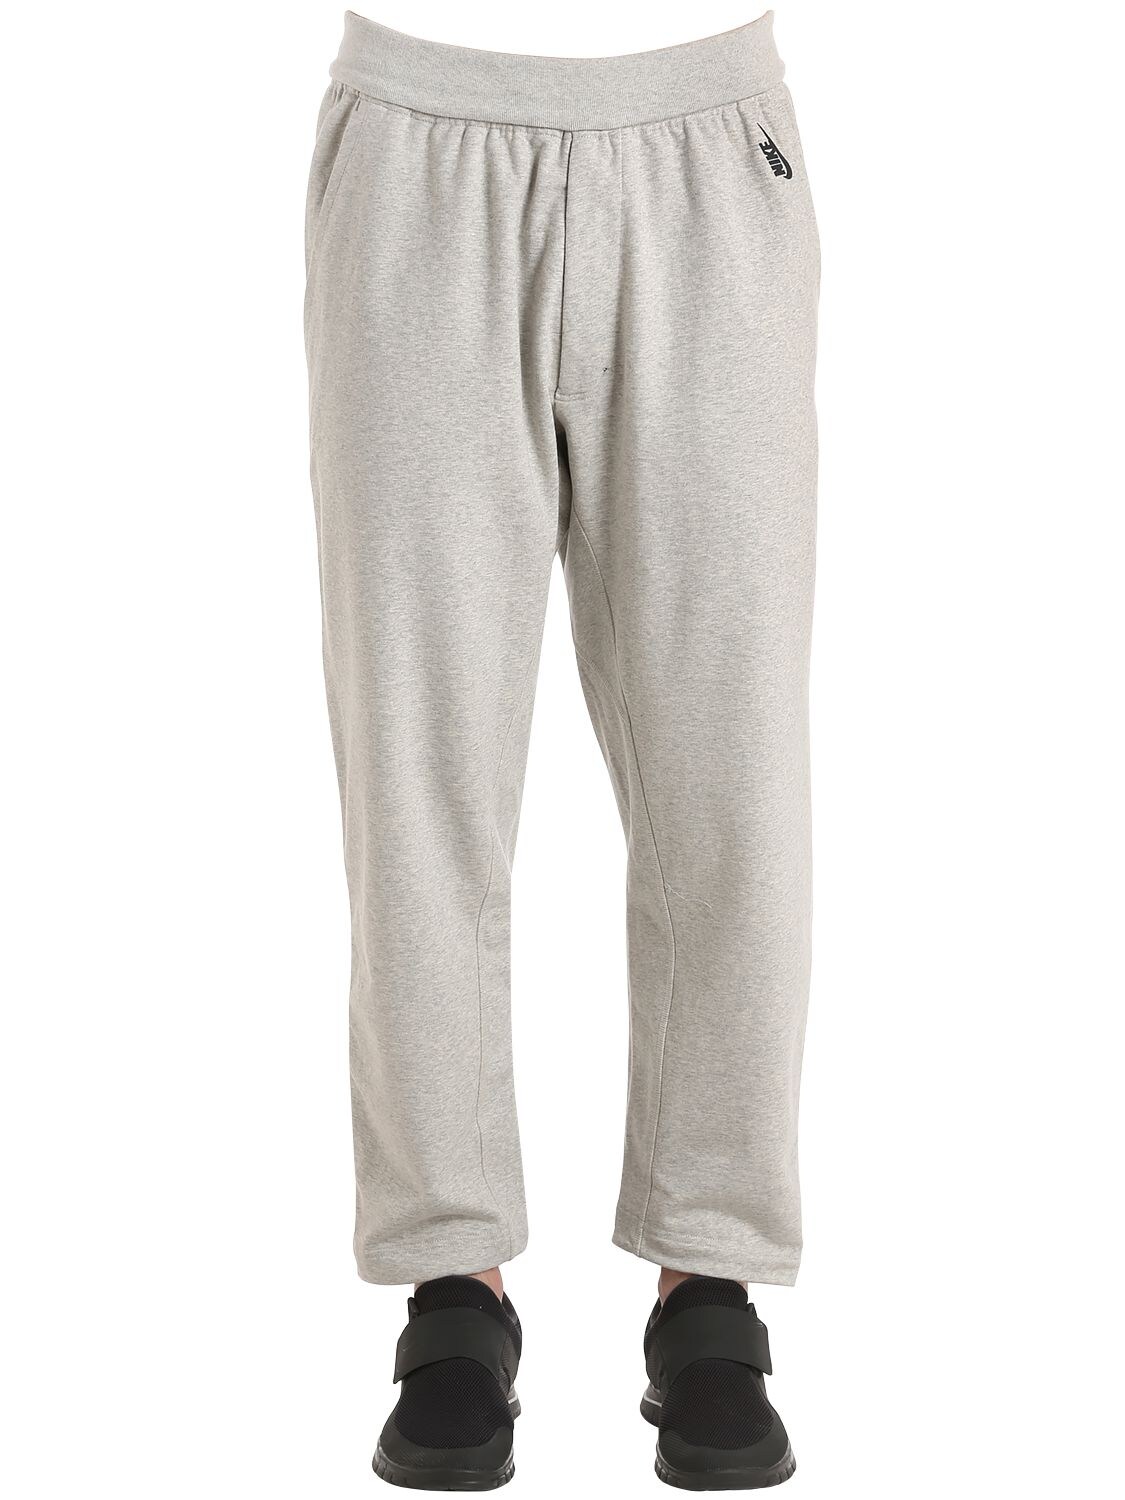 nikelab grey sweatpants